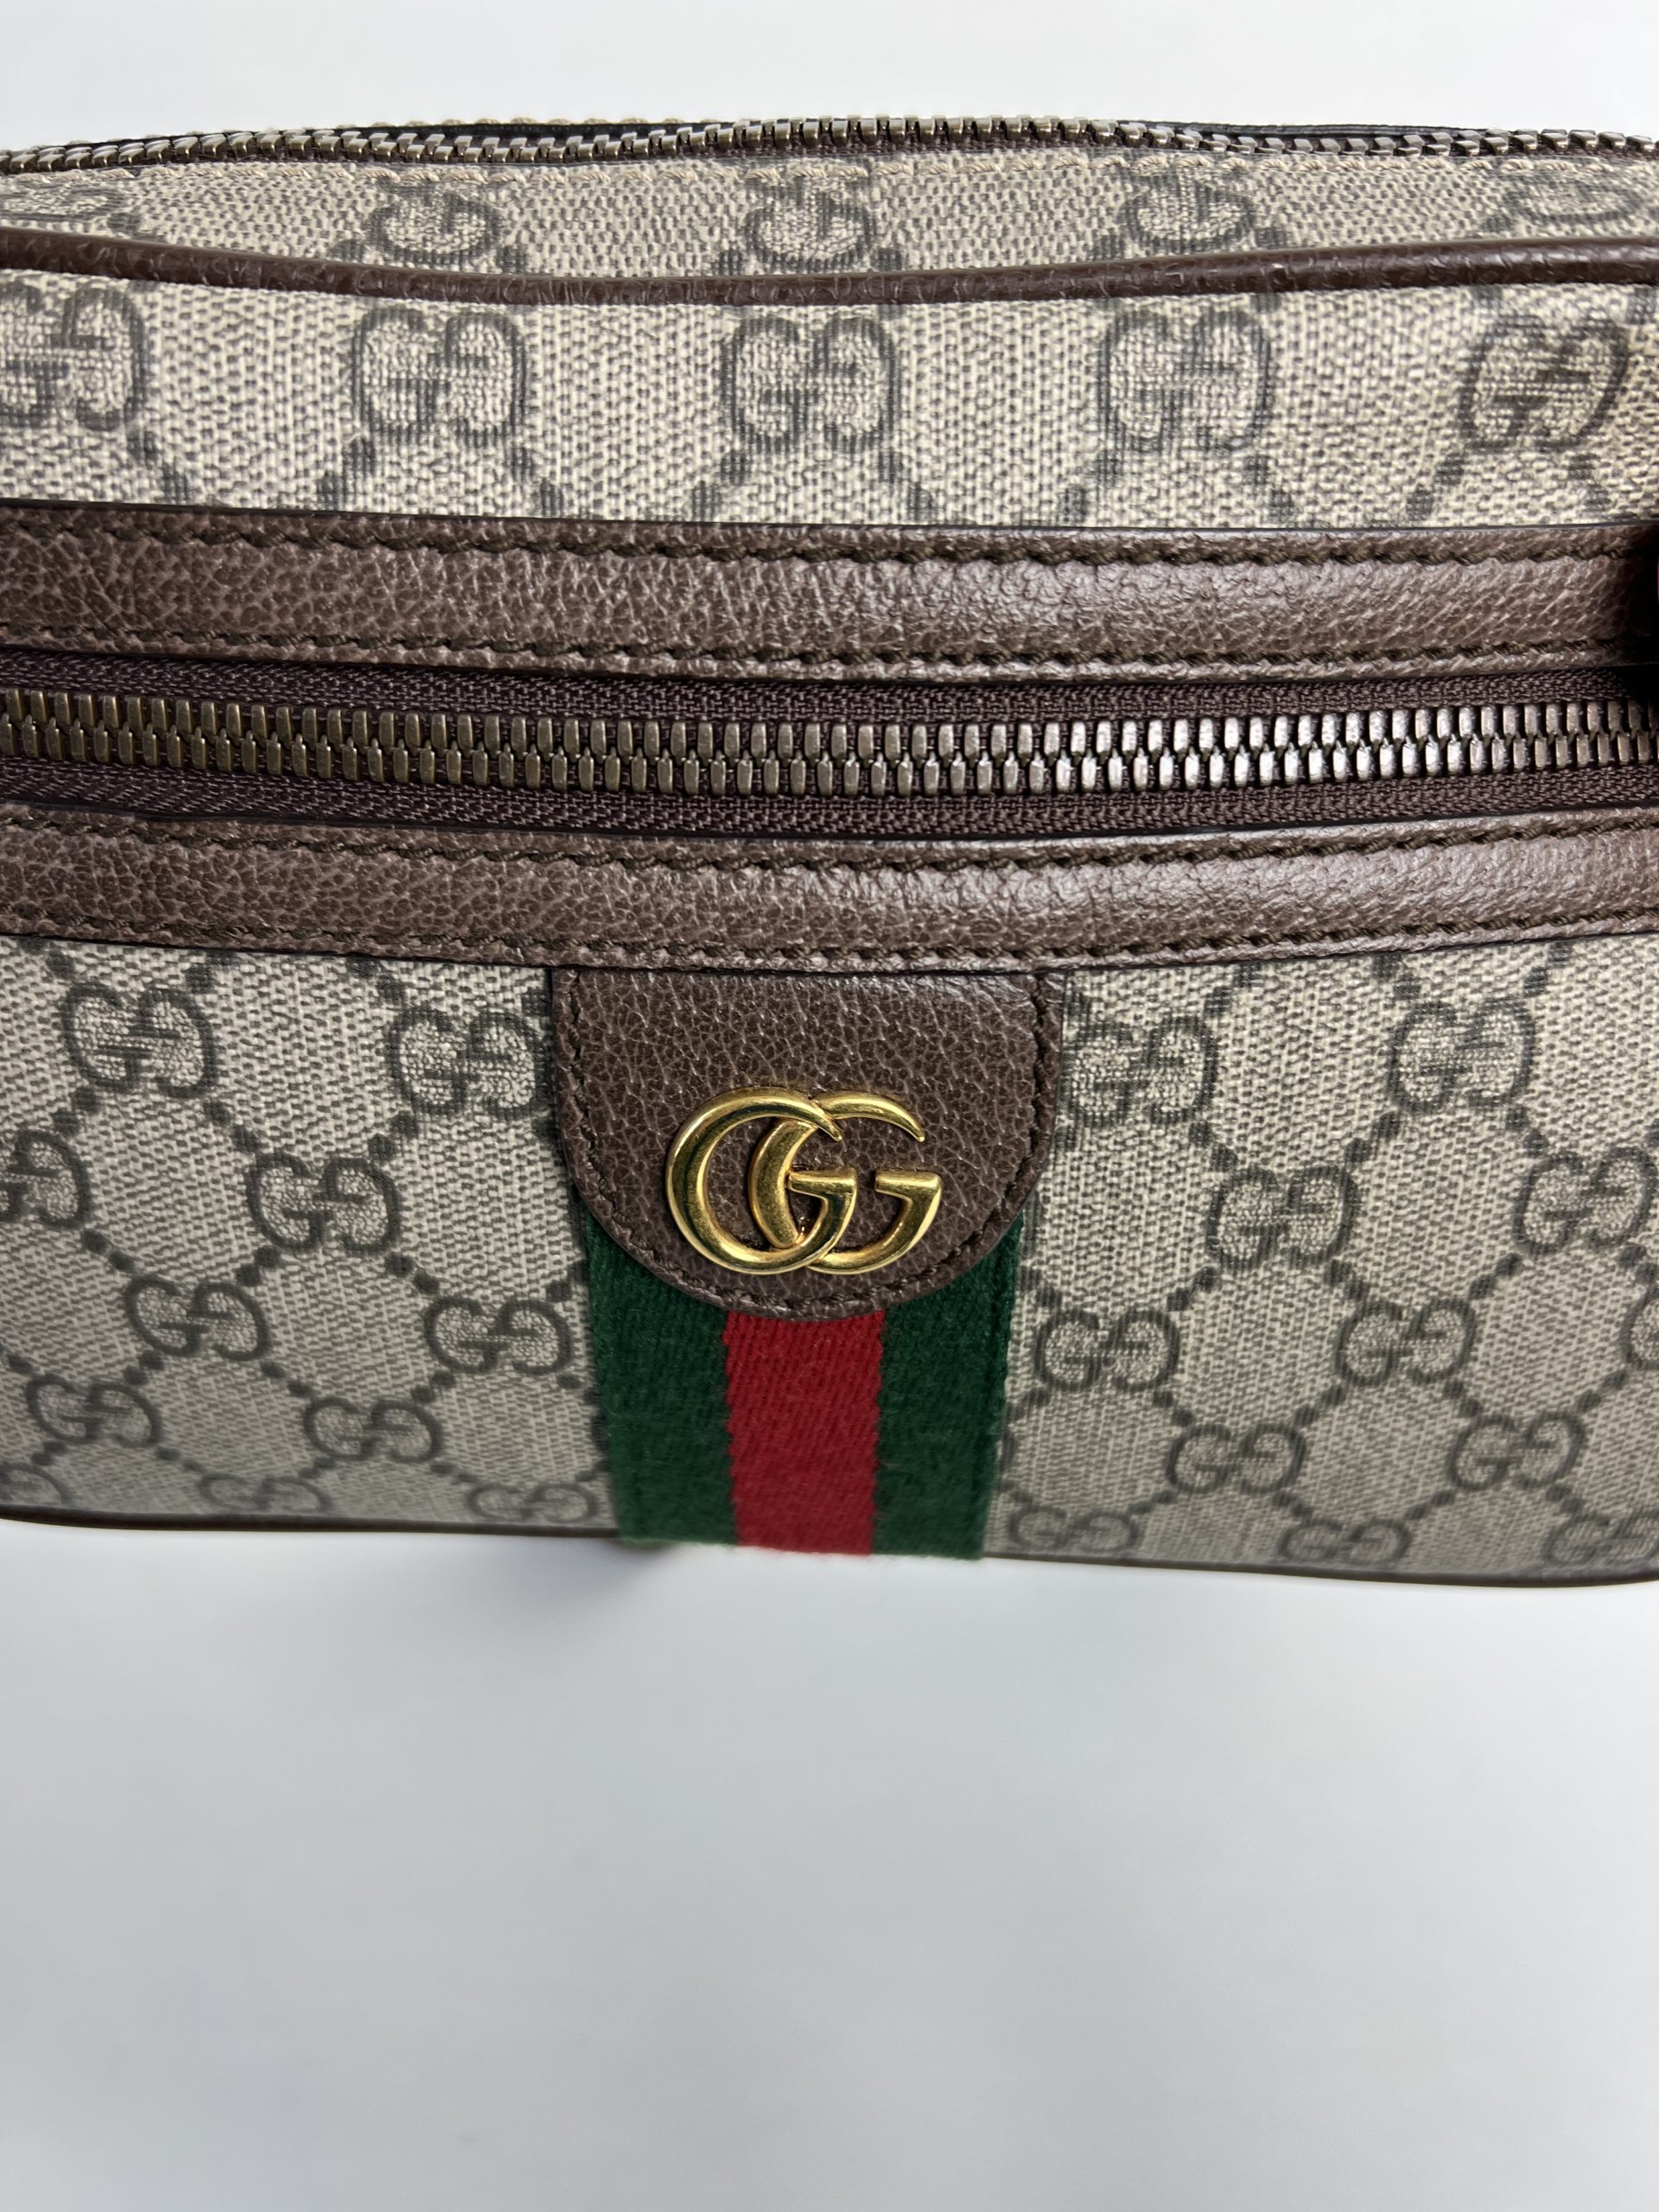 Gucci GG Supreme Mini Ophidia Iphone Belt Bag Dark Brown 85 34